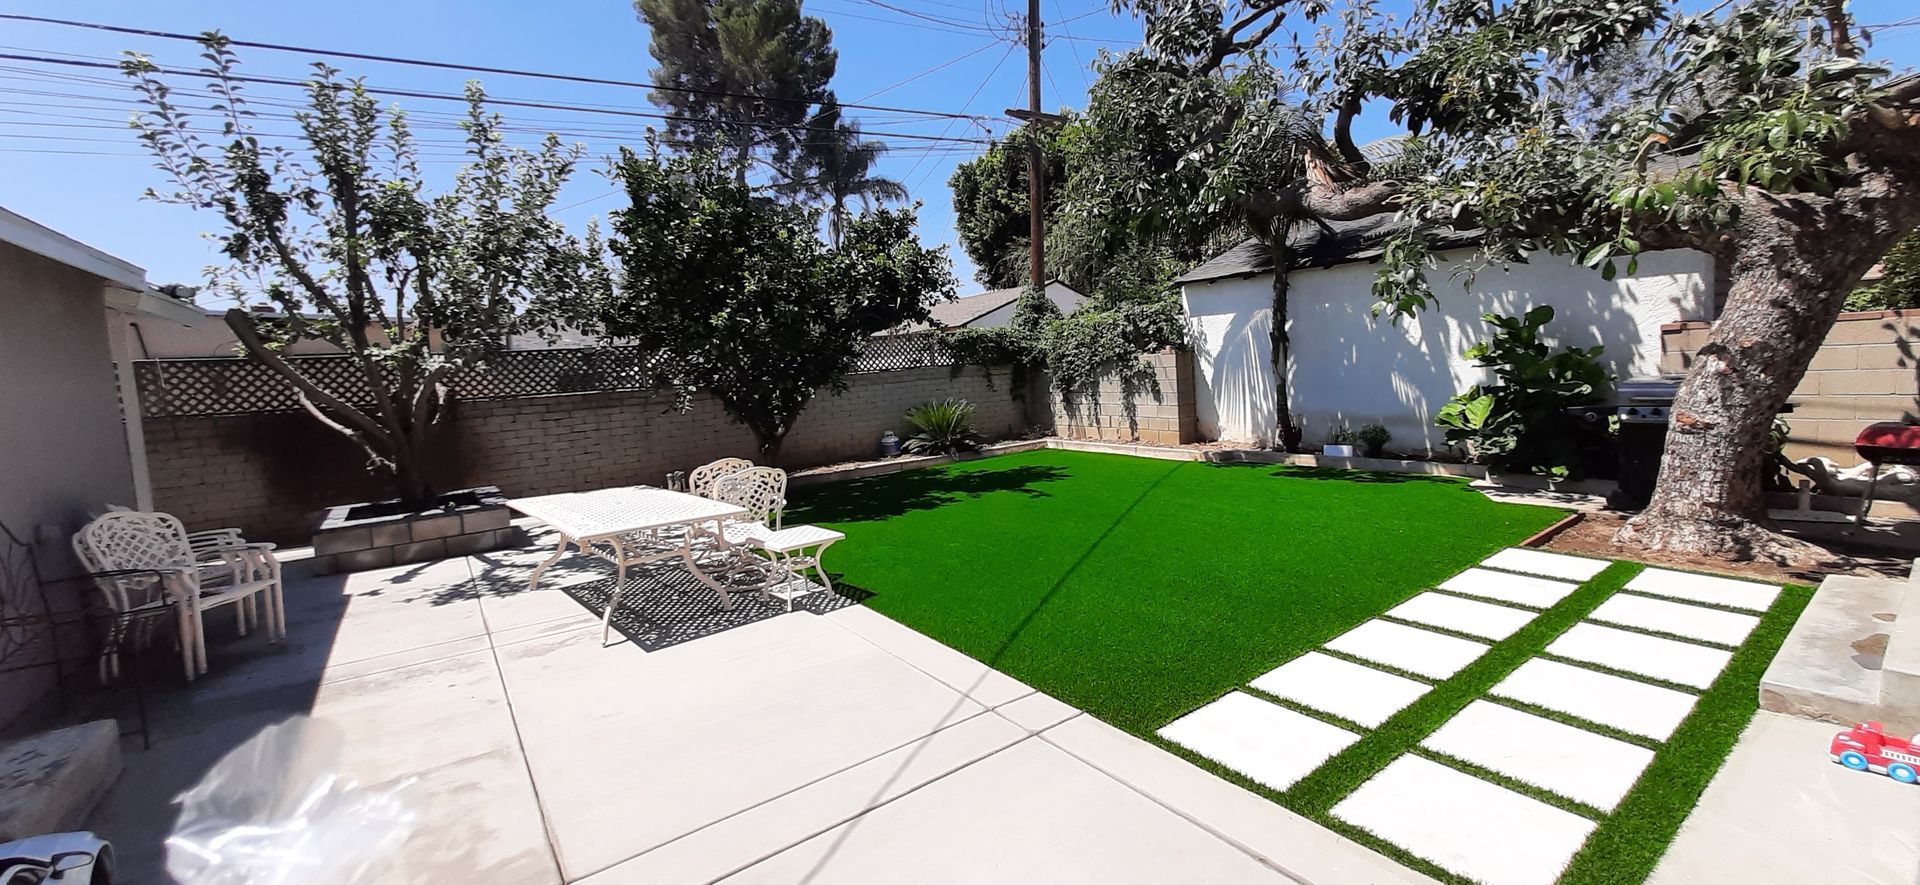 beautiful, redesigned artificial grass back yard